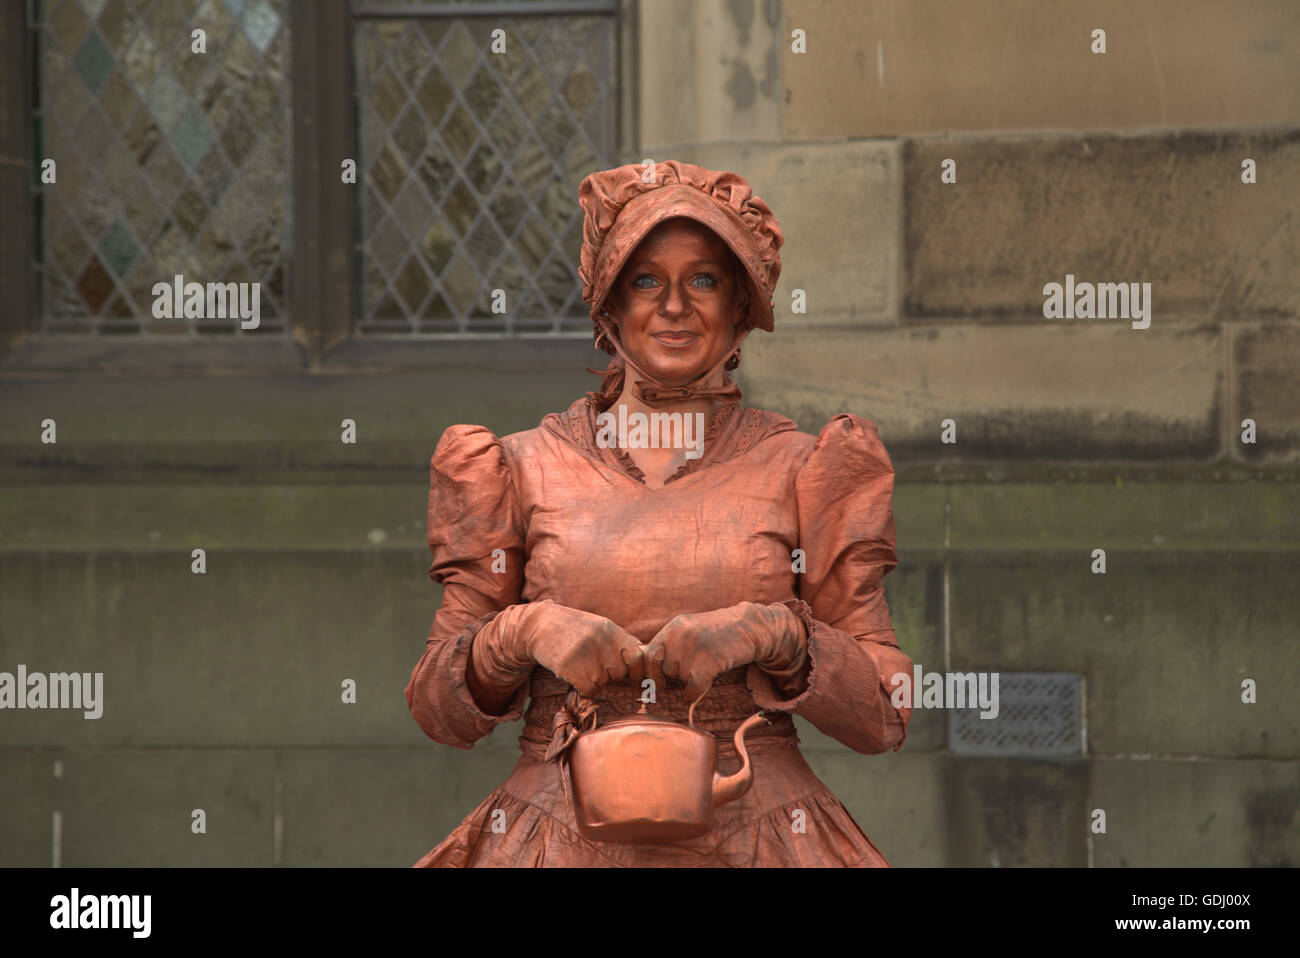 "Miss Copperpot" lebende Statue aus dem Edinburgh Festival Fringe Jungfrau gesponsert Straßenfest 2015 Edinburgh, Scotland, UK Stockfoto